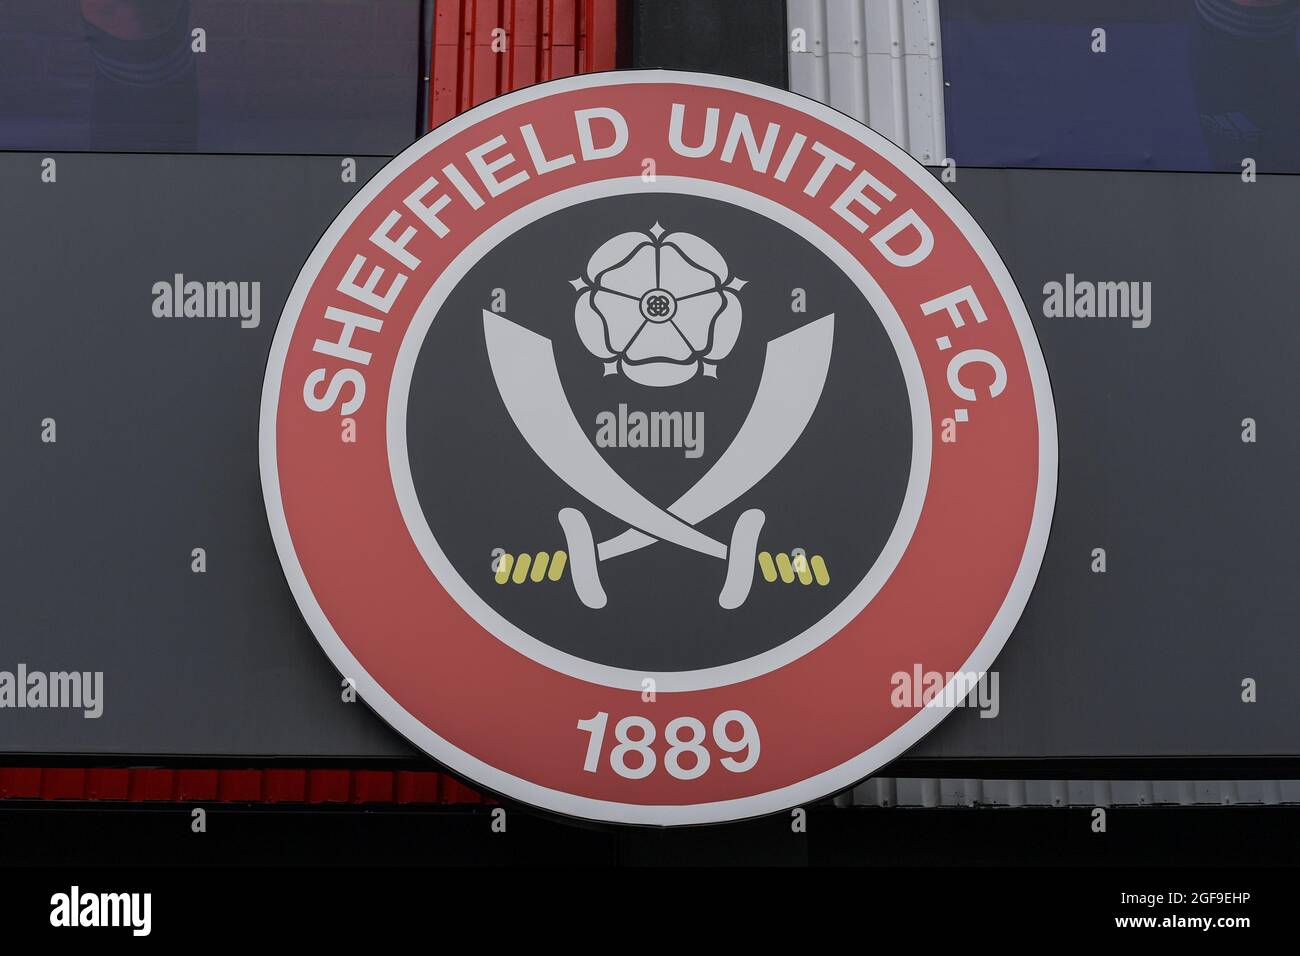 The Sheffield United club crest at Bramall Lane Stock Photo